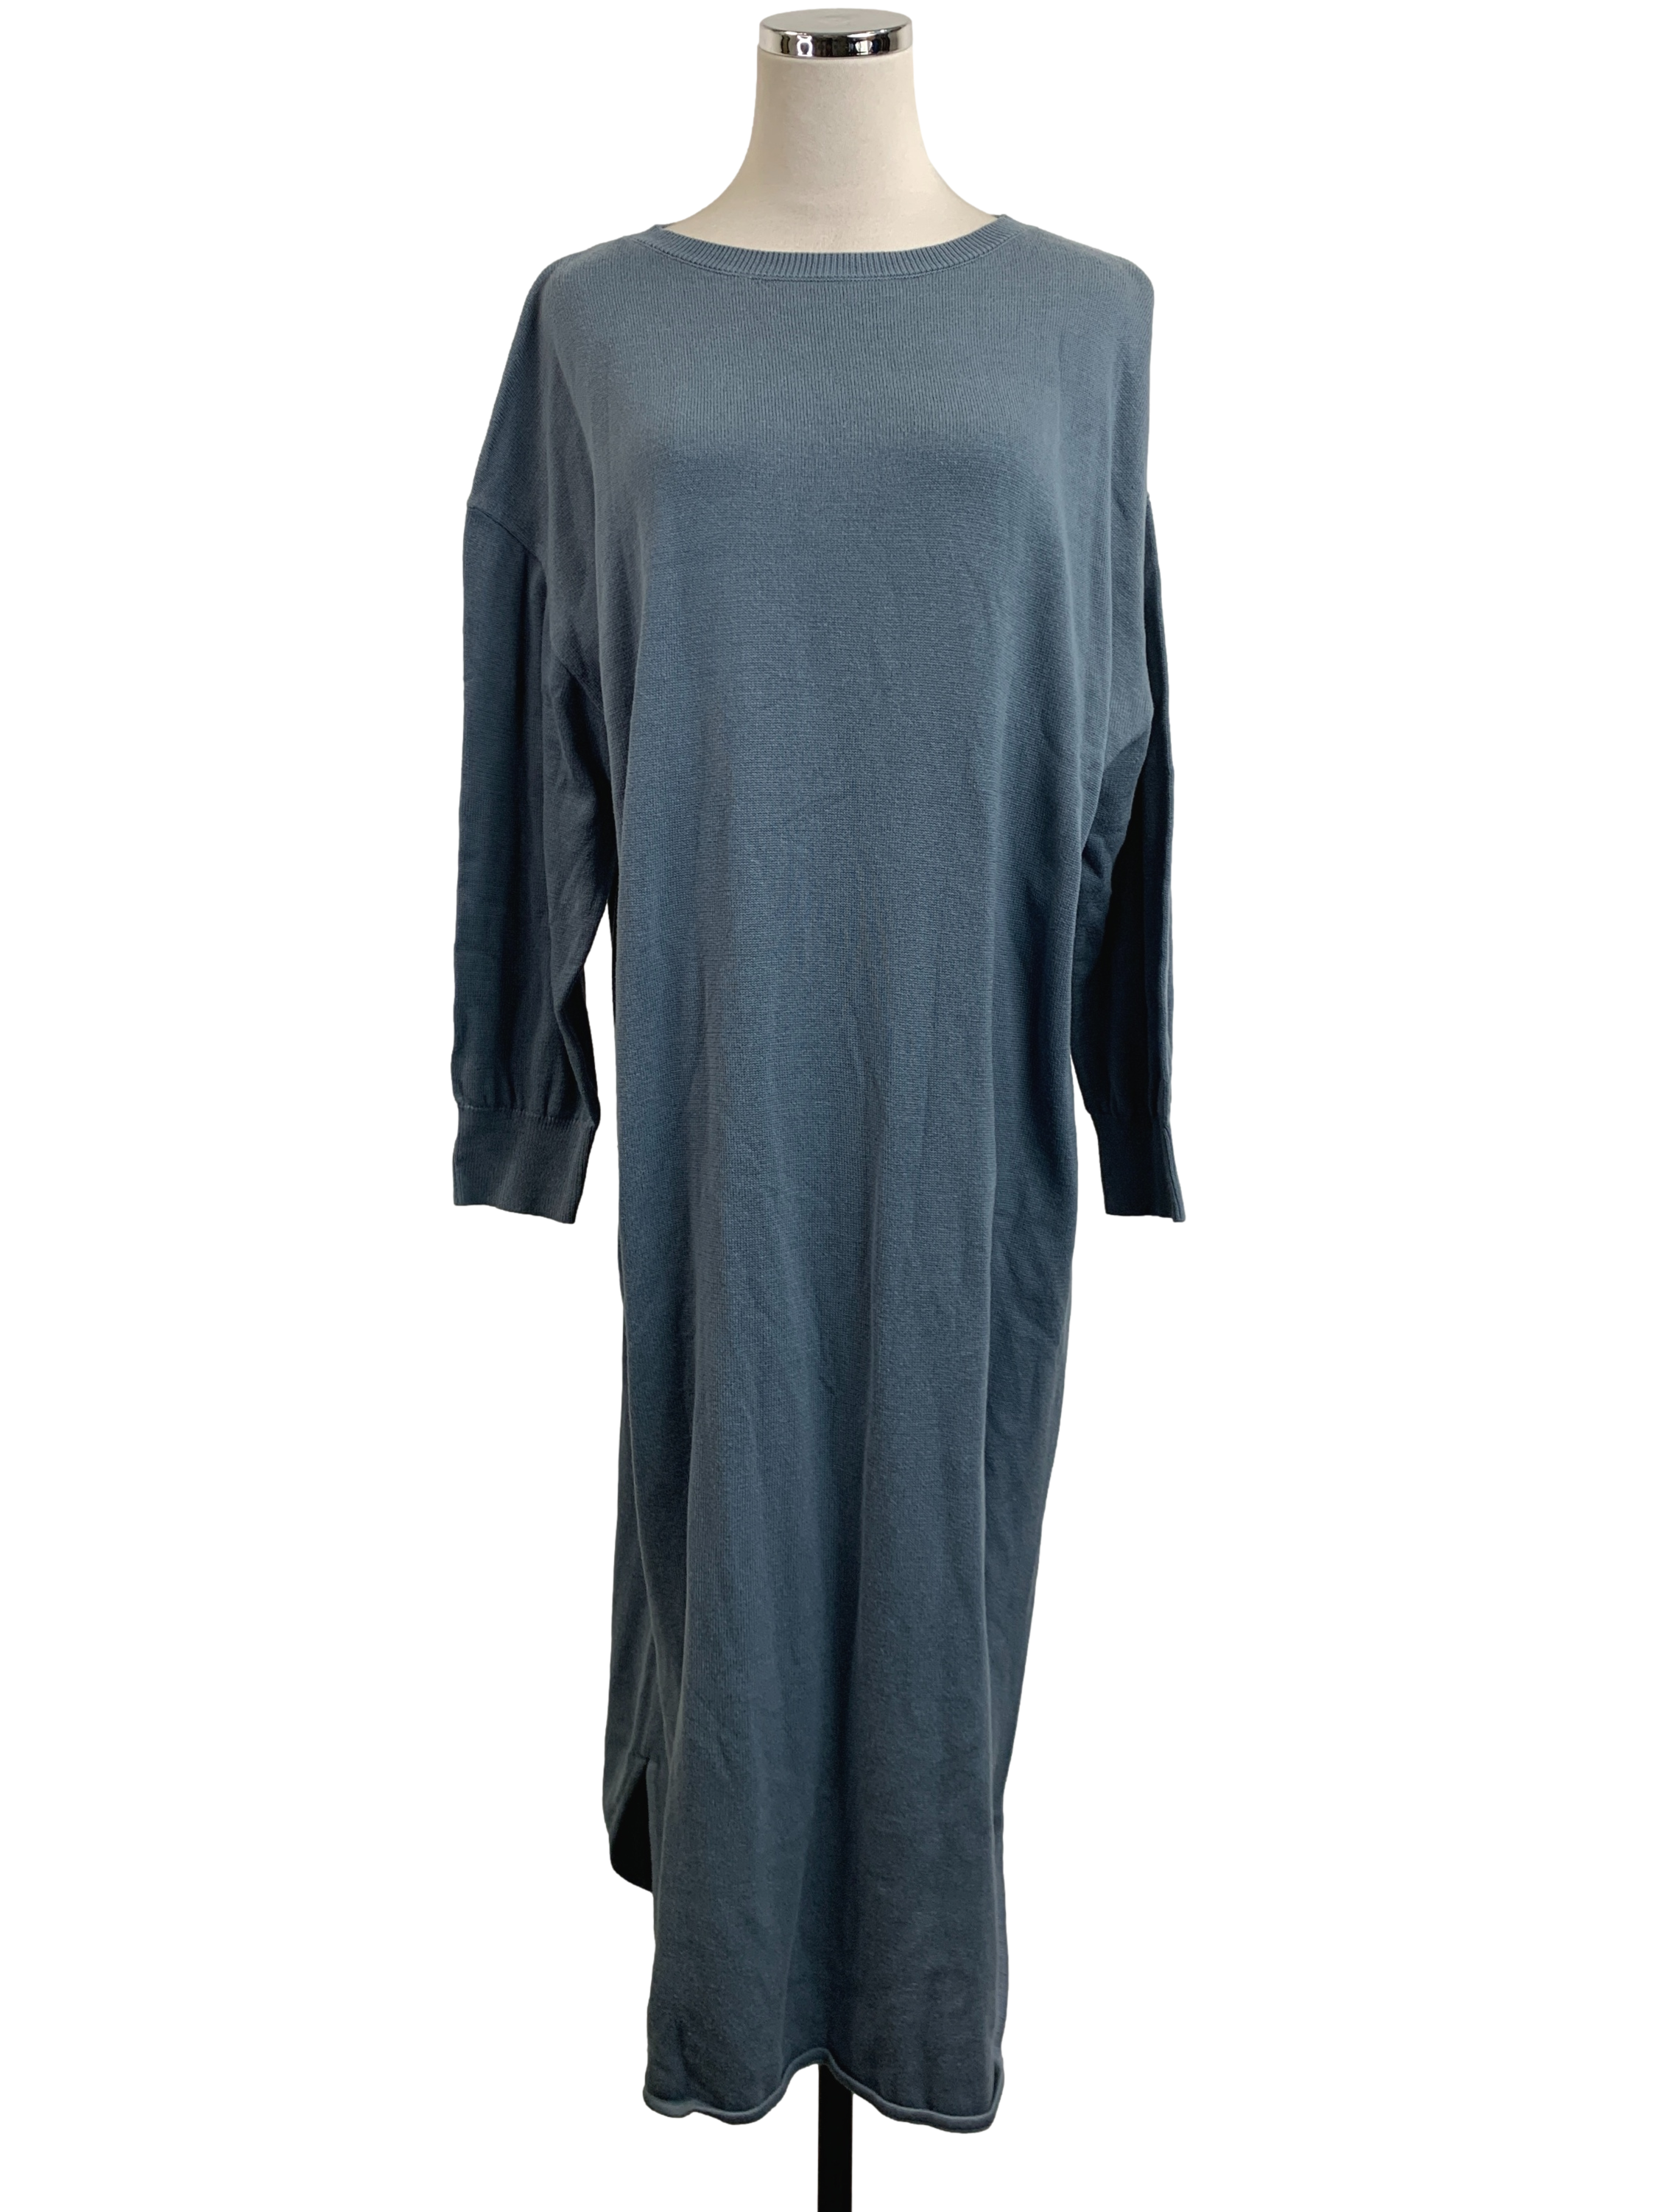 Stone Blue Long Sleeve Knit Dress